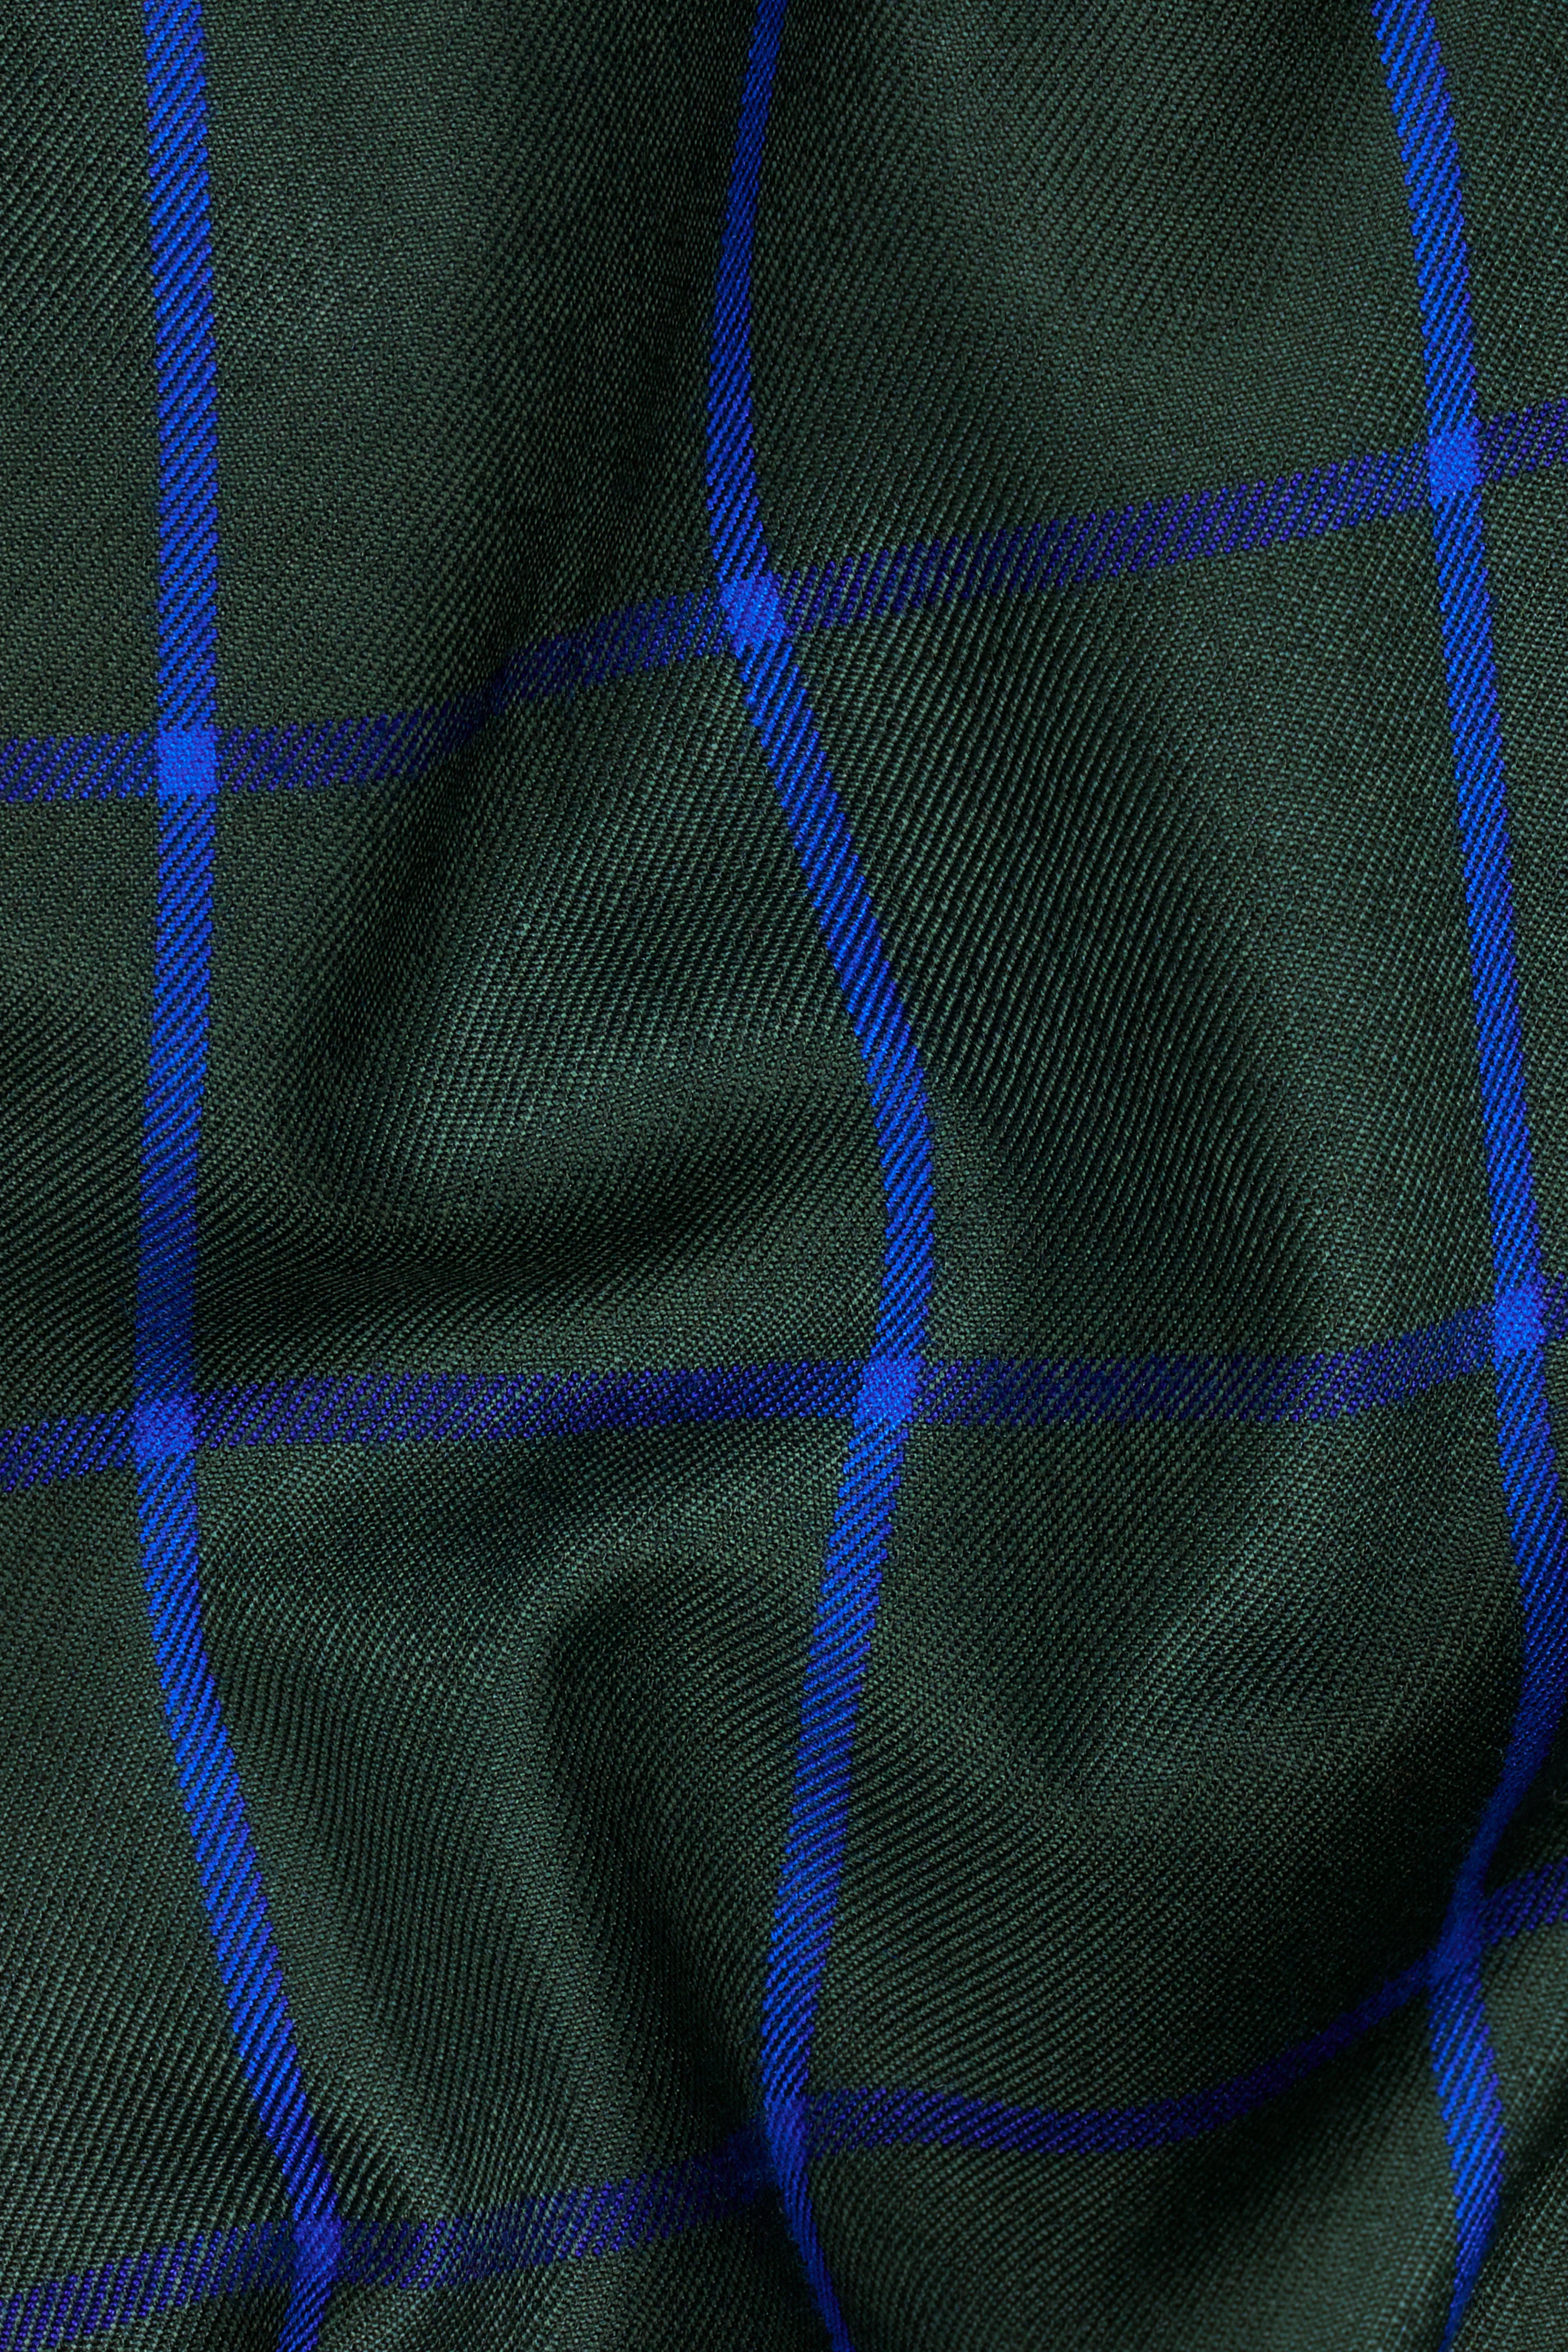 Kombu Green Checkered Wool Rich Suit ST2839-KWL-FB-D53-36, ST2839-KWL-FB-D53-38, ST2839-KWL-FB-D53-40, ST2839-KWL-FB-D53-42, ST2839-KWL-FB-D53-44, ST2839-KWL-FB-D53-46, ST2839-KWL-FB-D53-48, ST2839-KWL-FB-D53-50, ST2839-KWL-FB-D53-52, ST2839-KWL-FB-D53-54, ST2839-KWL-FB-D53-56, ST2839-KWL-FB-D53-58, ST2839-KWL-FB-D53-60